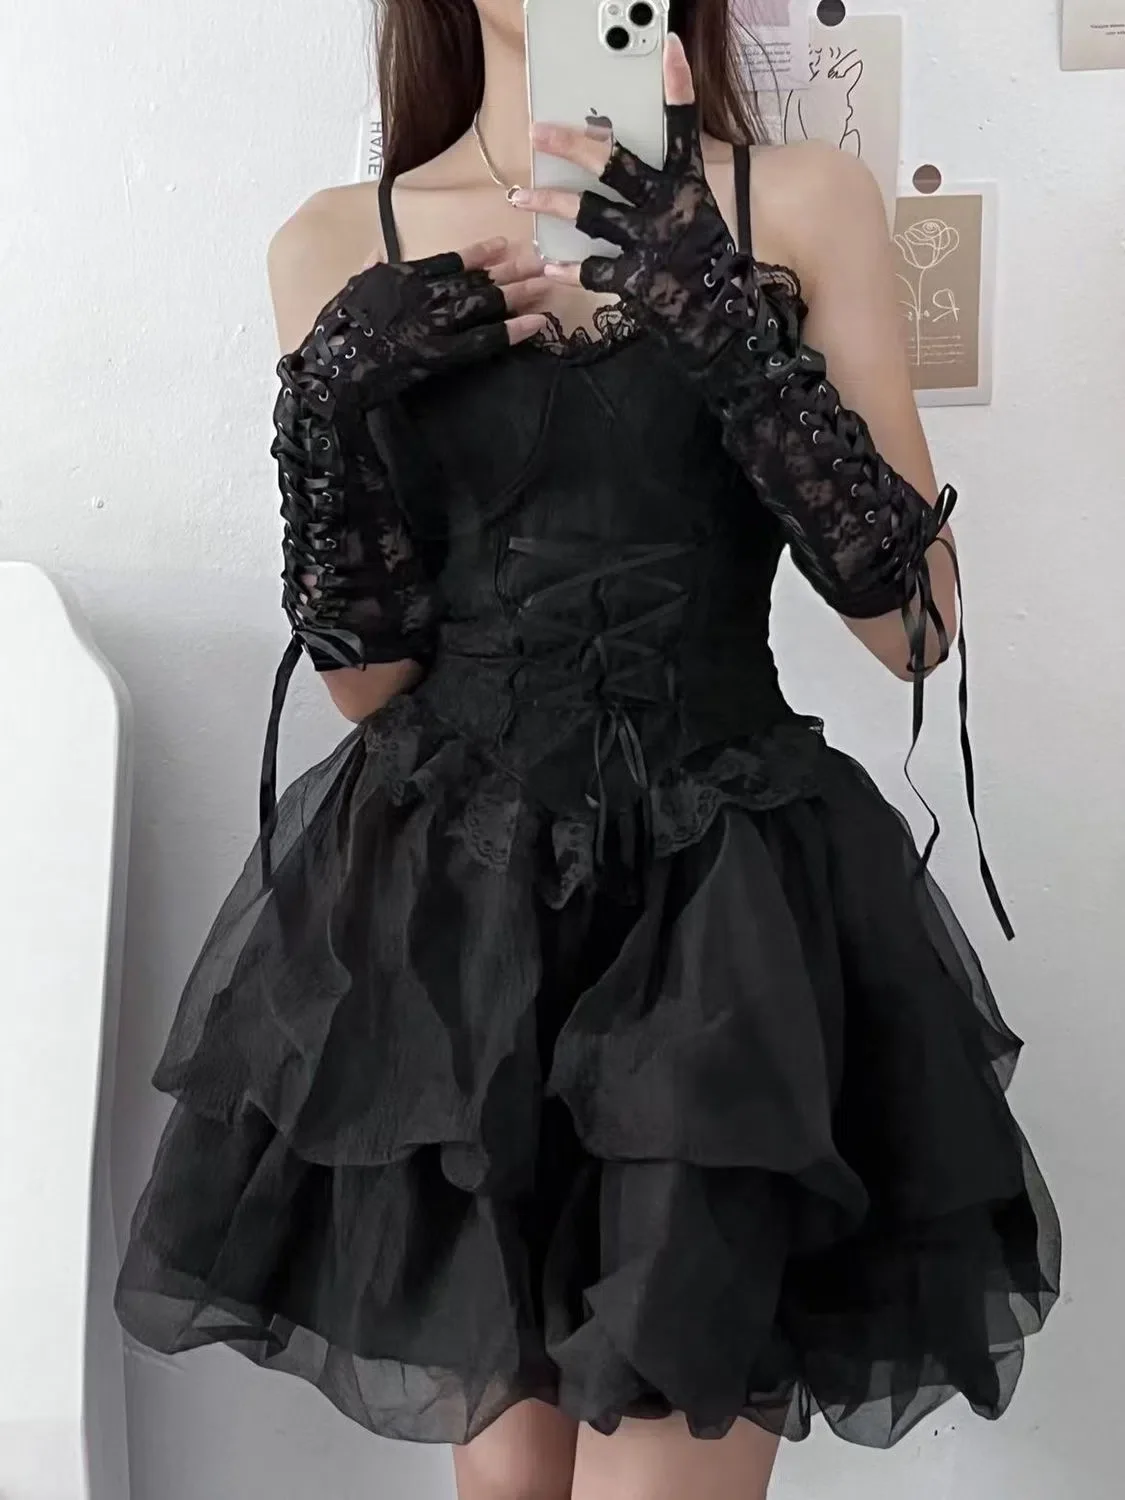 diablo gothic hot girl suspender dress